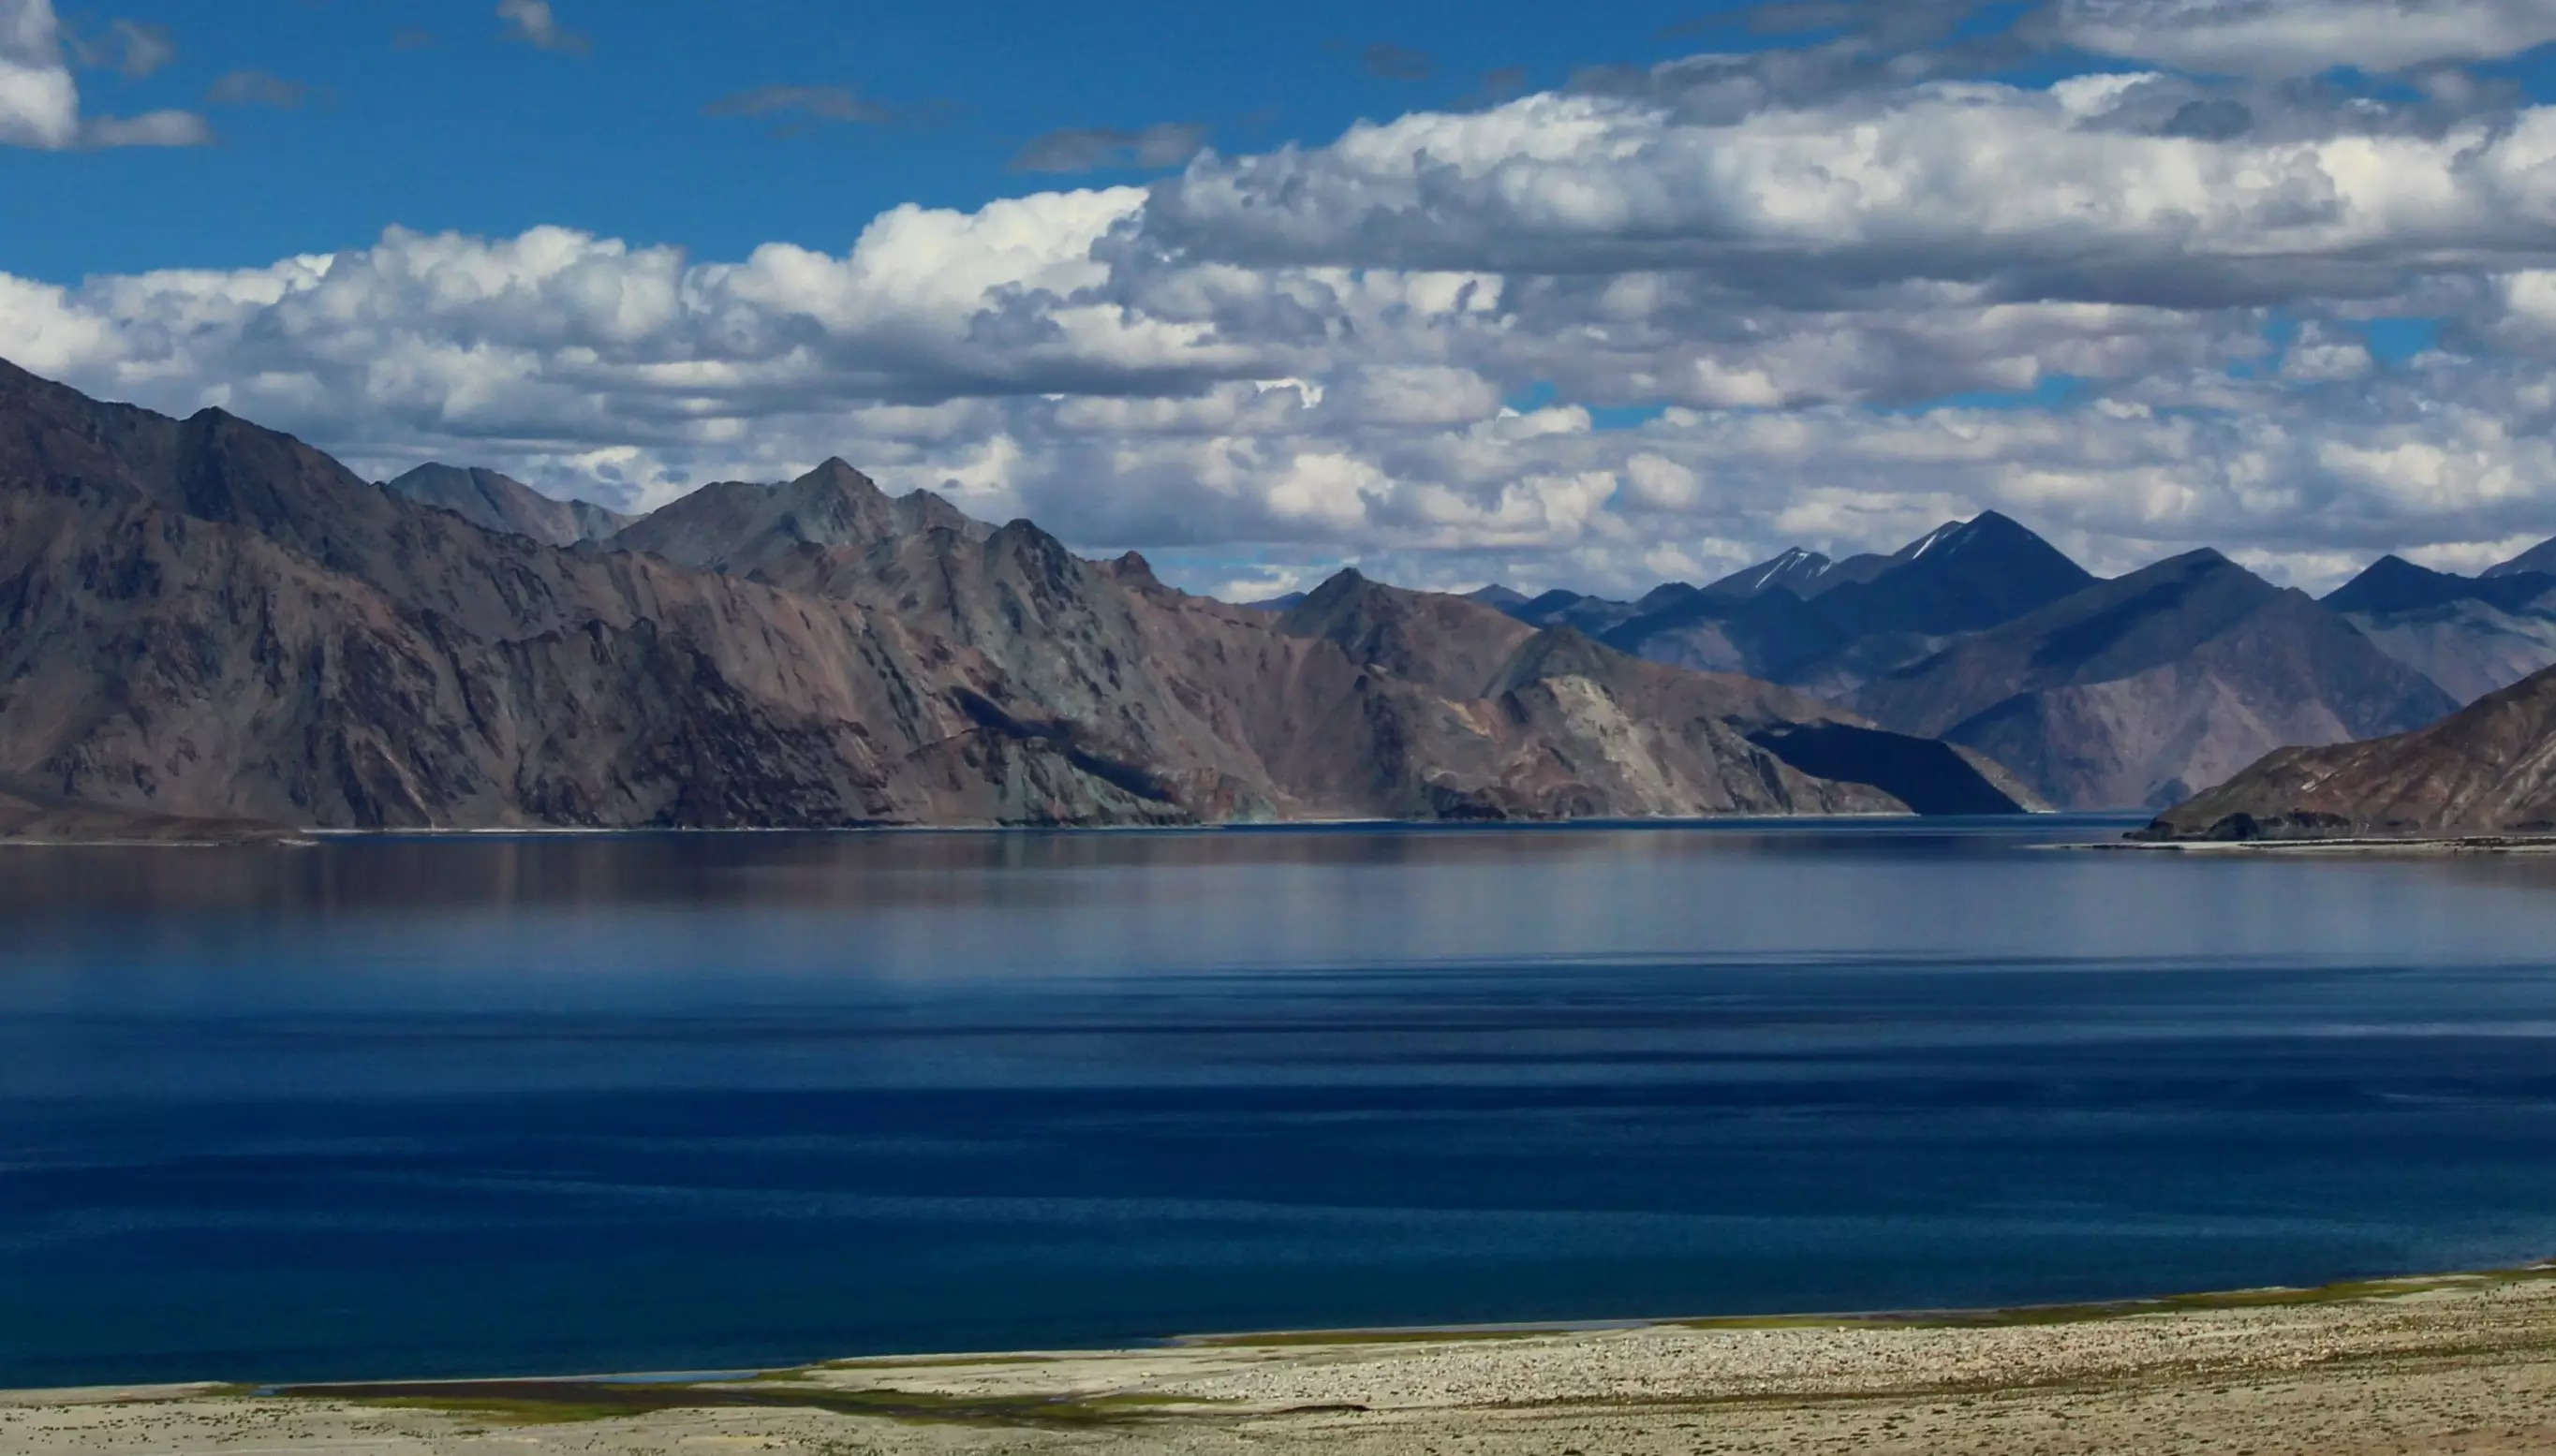 Pangong Tso is a major attraction among tourists visiting Ladakh